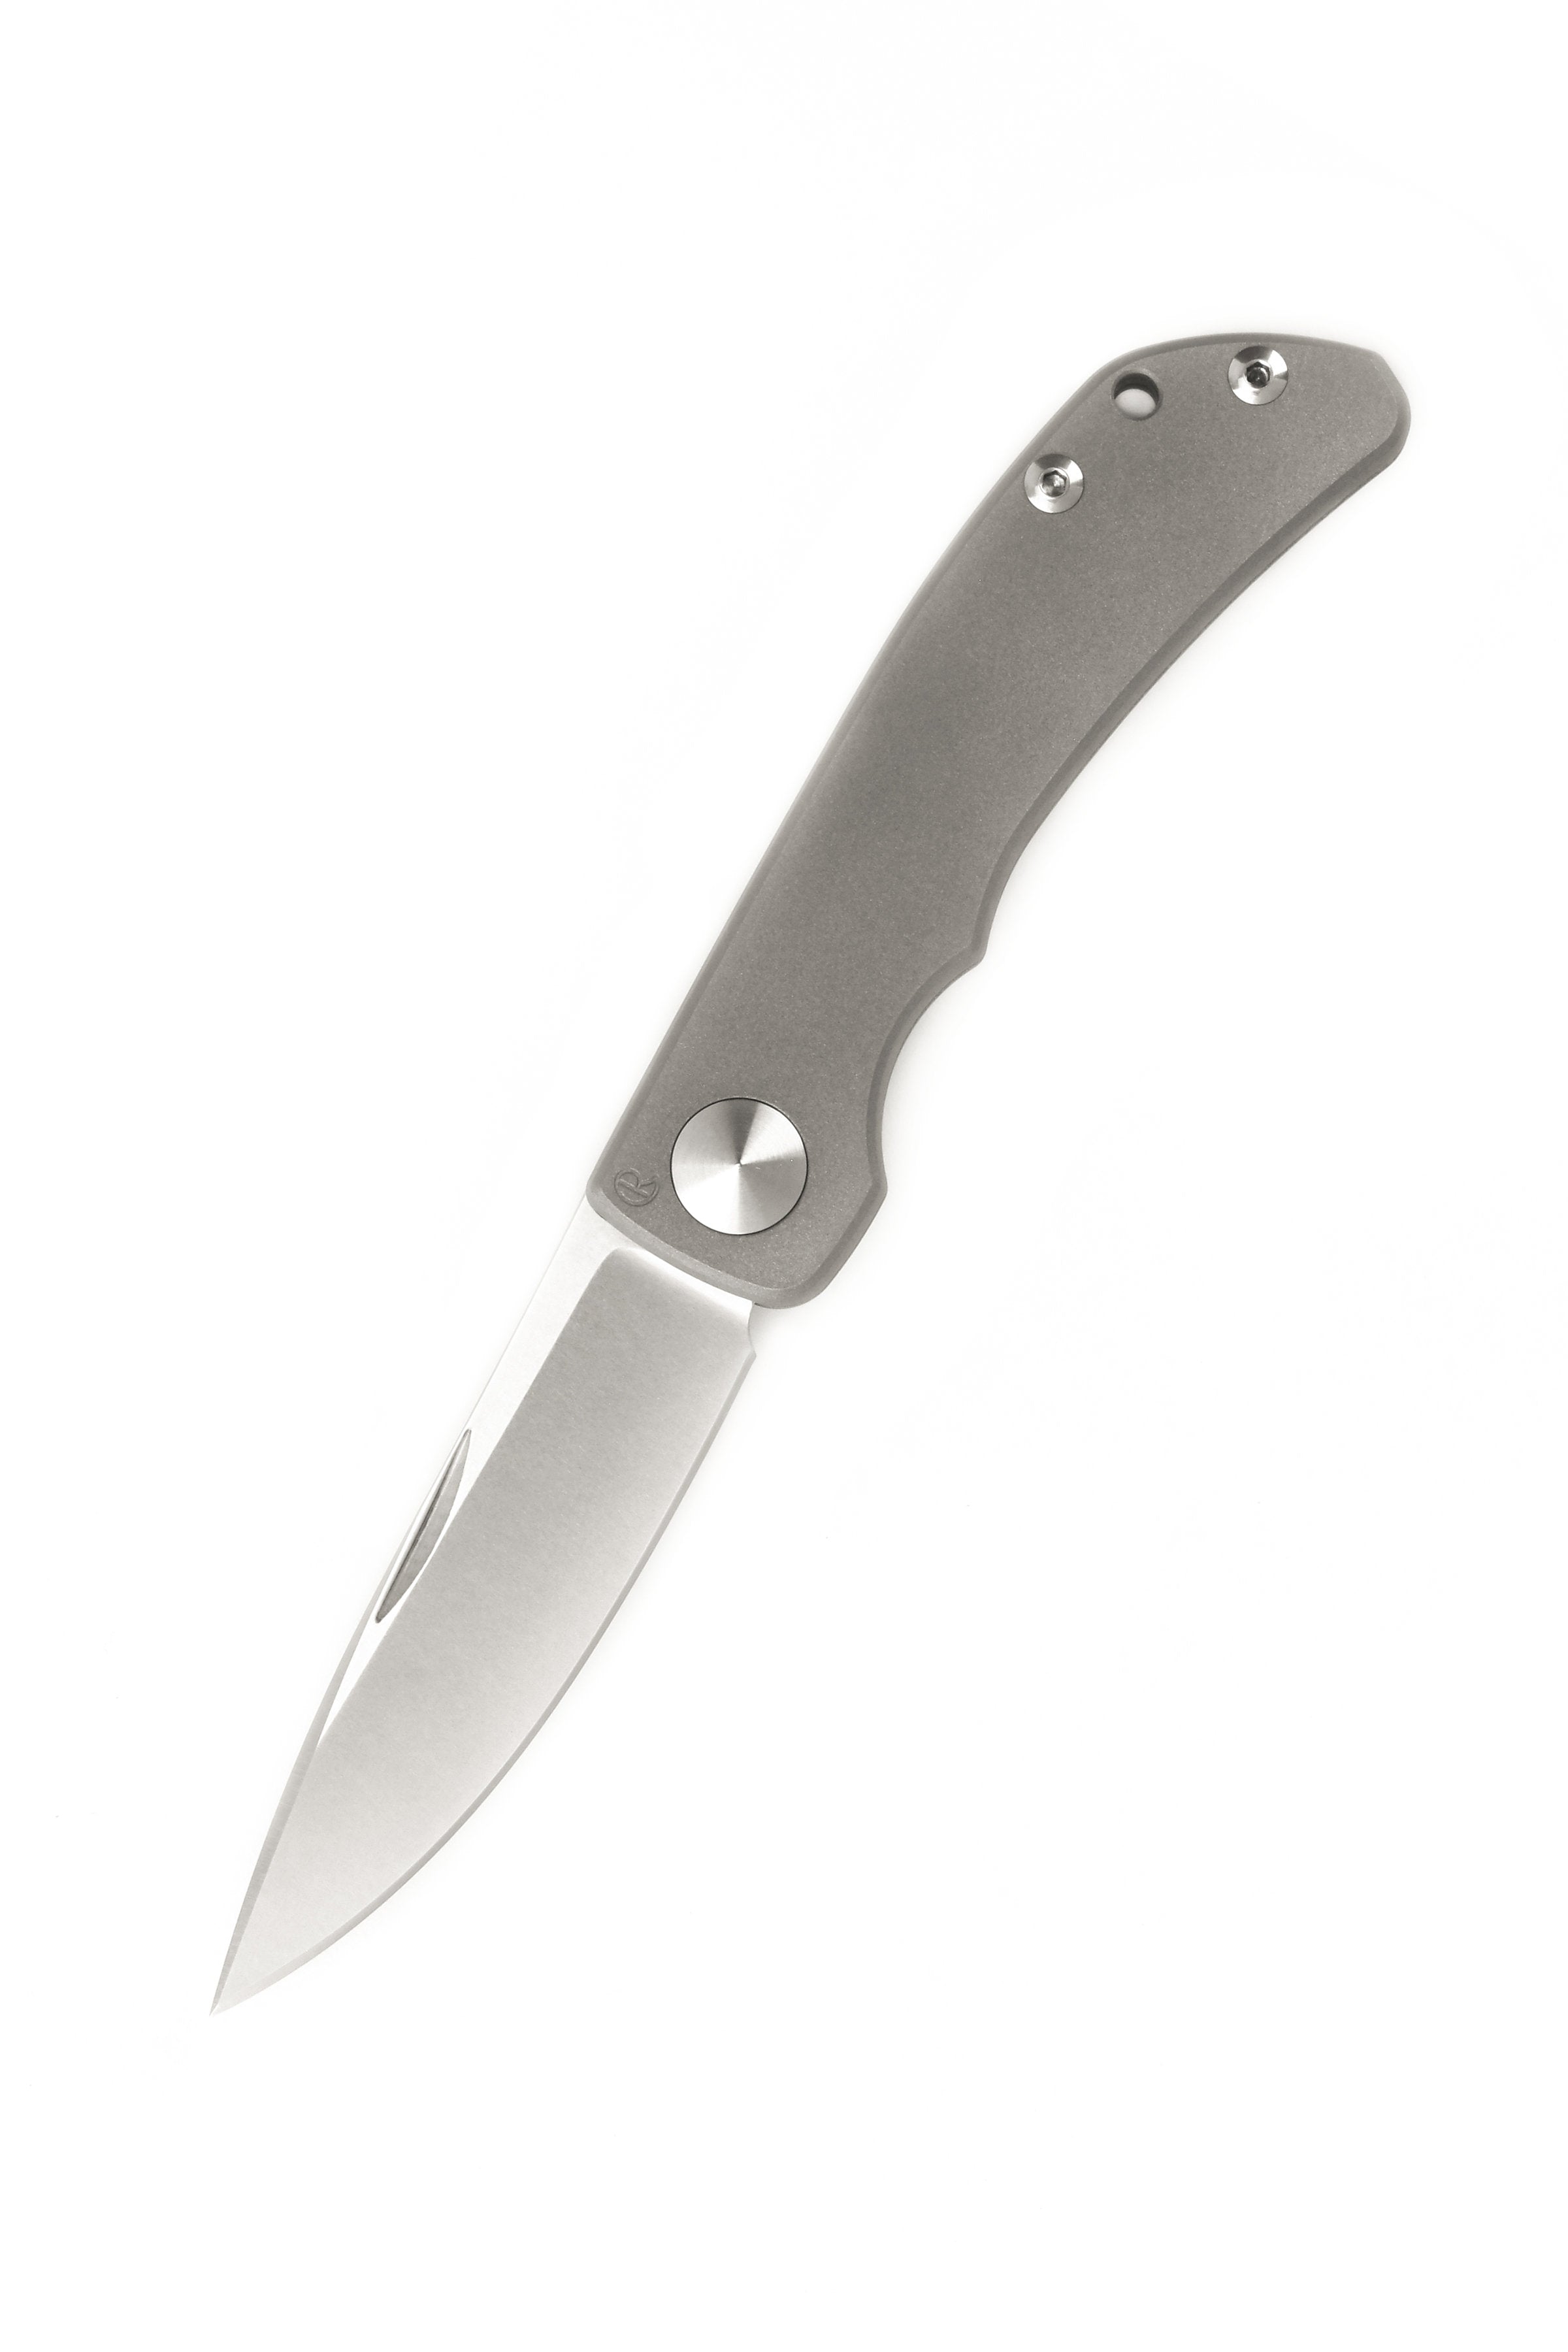 Chris Reeve Knives Impinda - Slip Joint - Plain Edge - Drop Point - IMP-1000